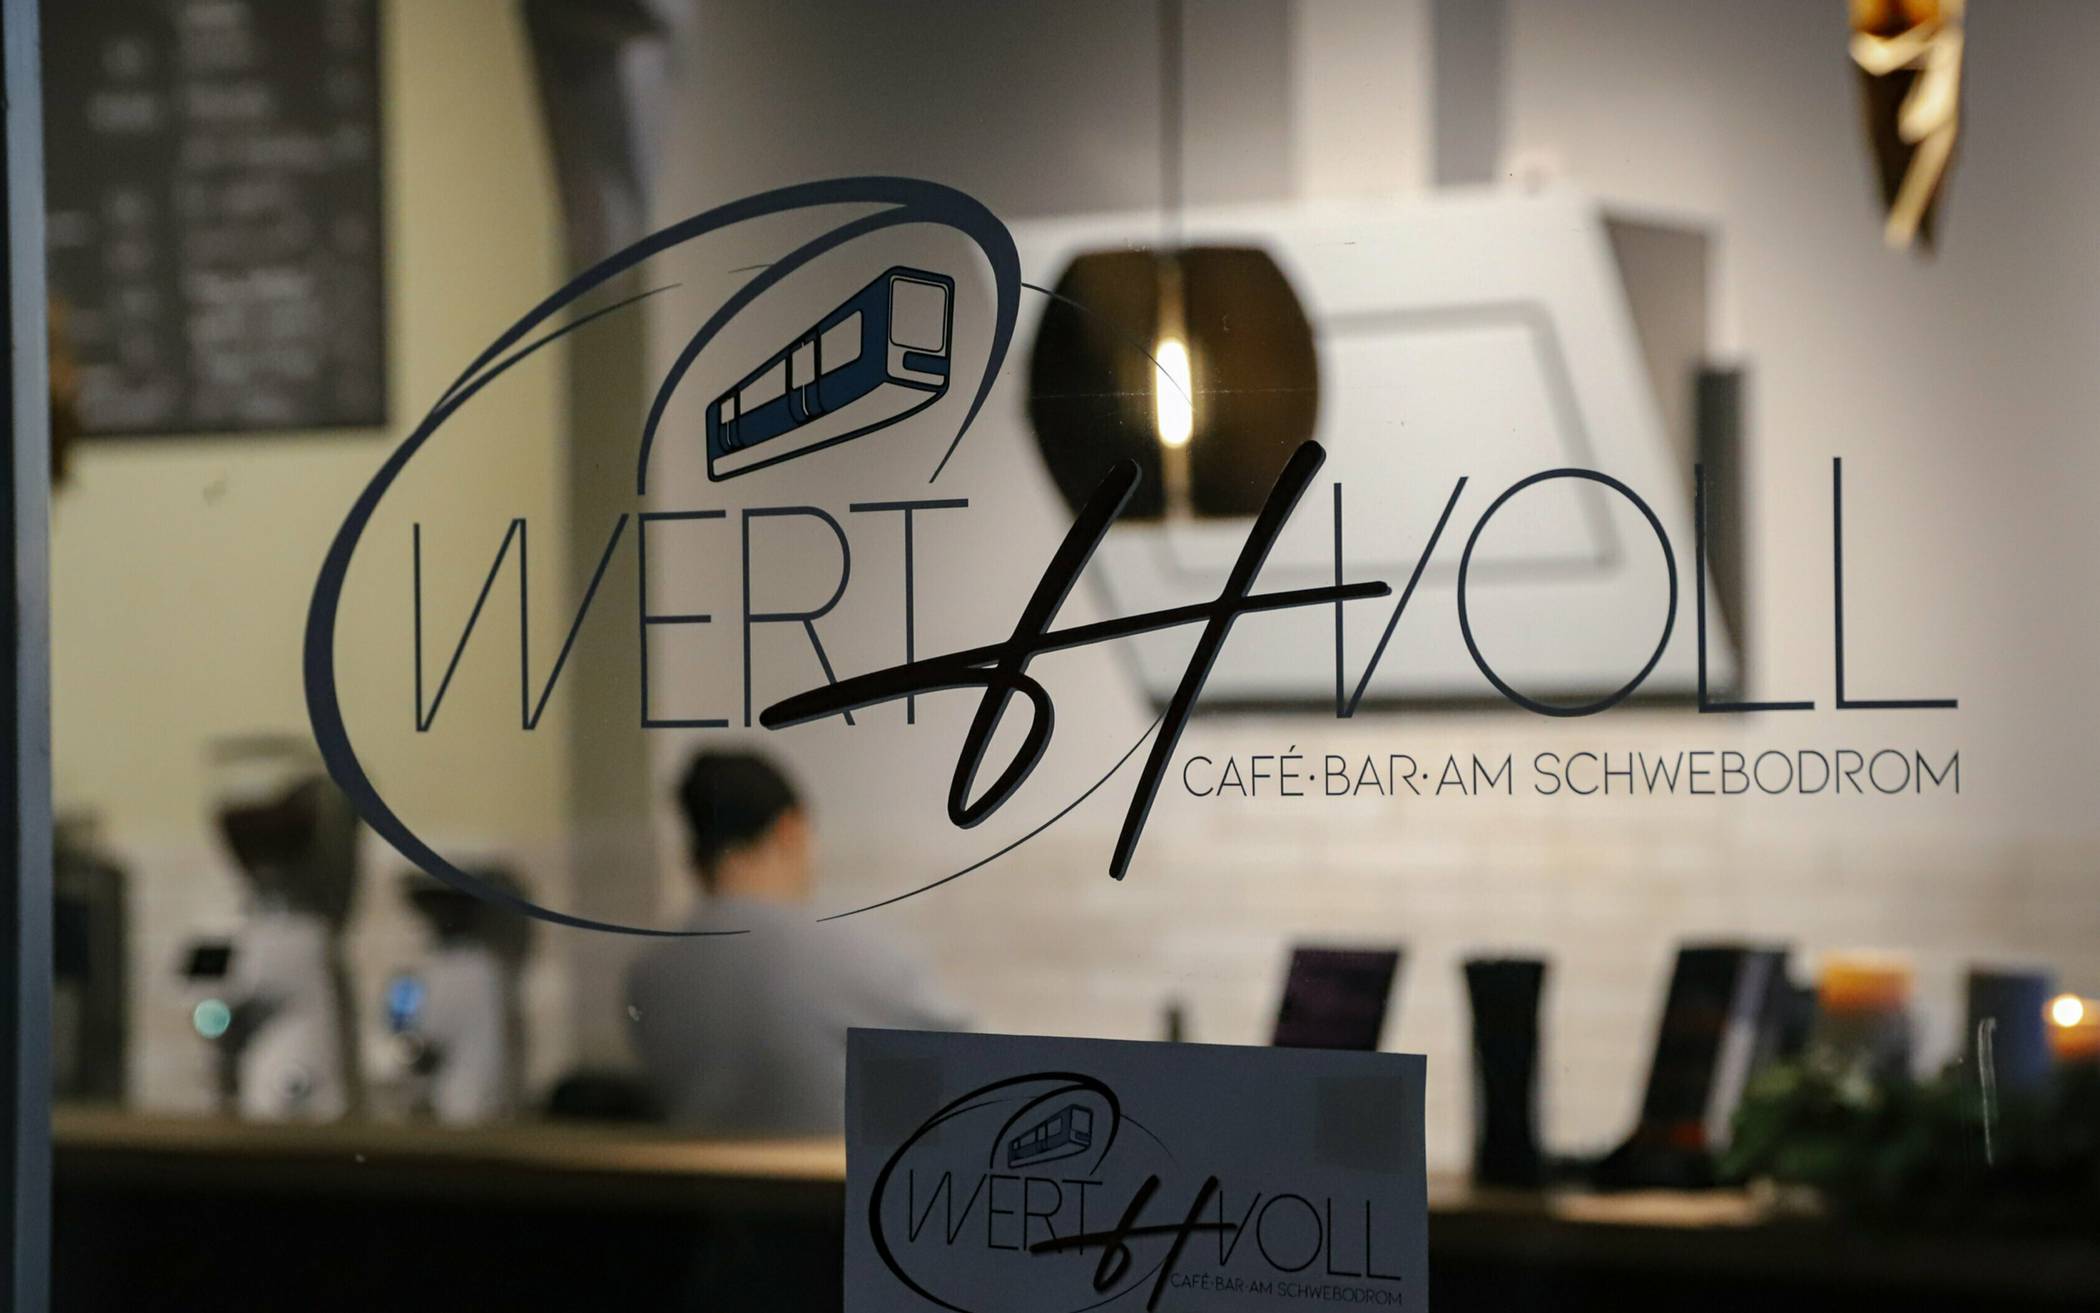 Das „Café Werthvoll“ an der Höhne